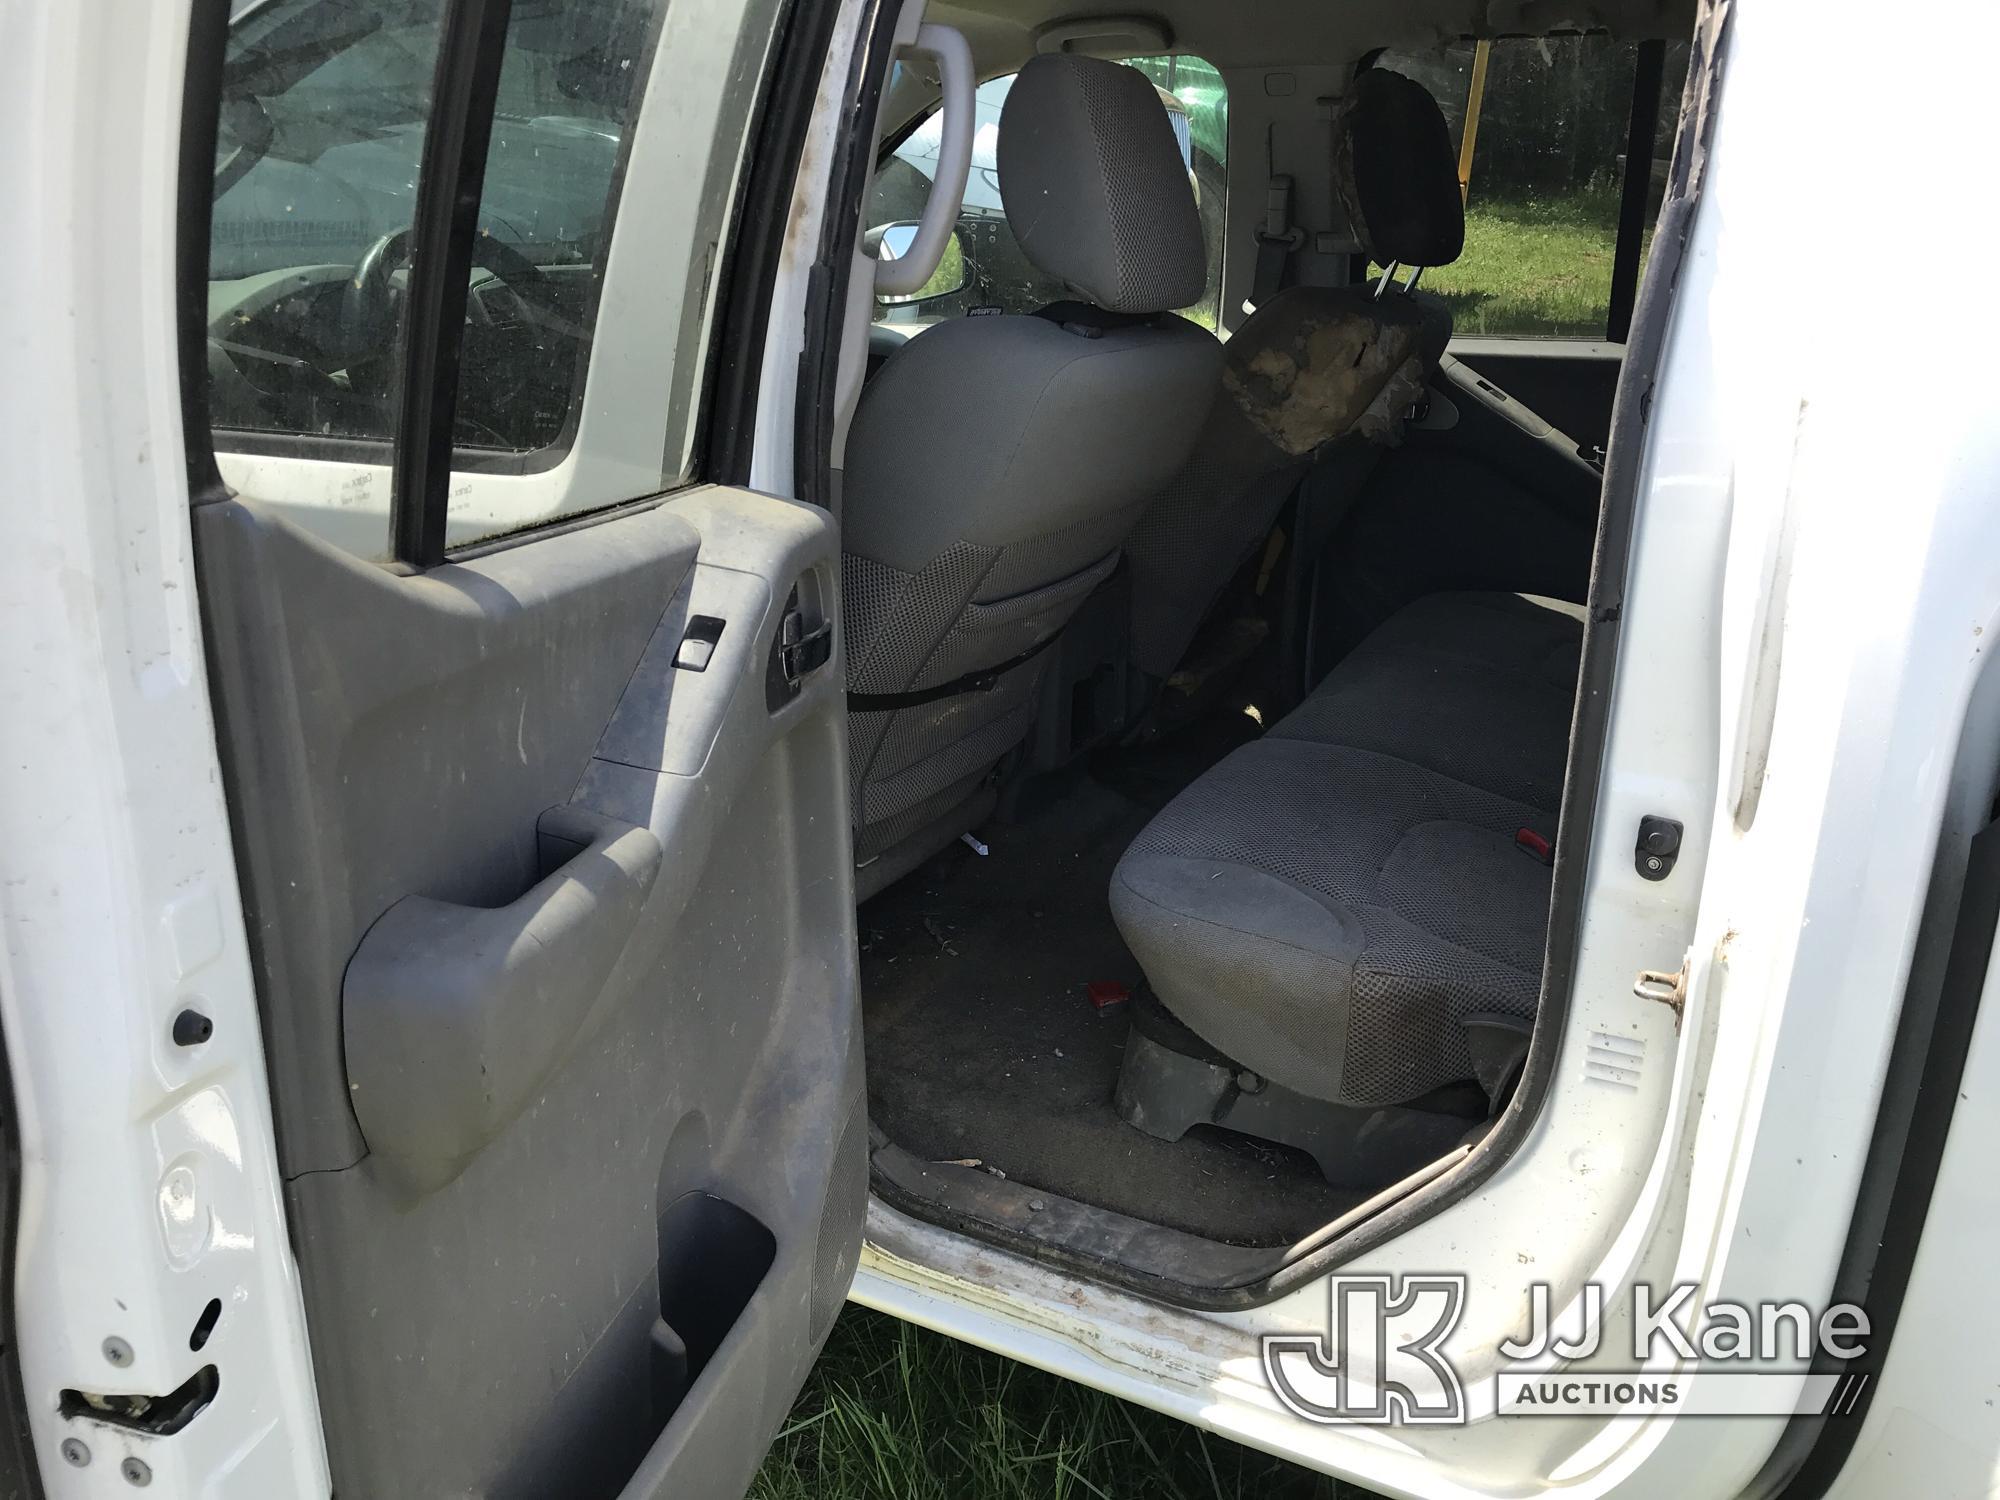 (Kodak, TN) 2015 Nissan Frontier 4x4 Crew-Cab Pickup Truck Not Running & Condition Unknown) (Cracked